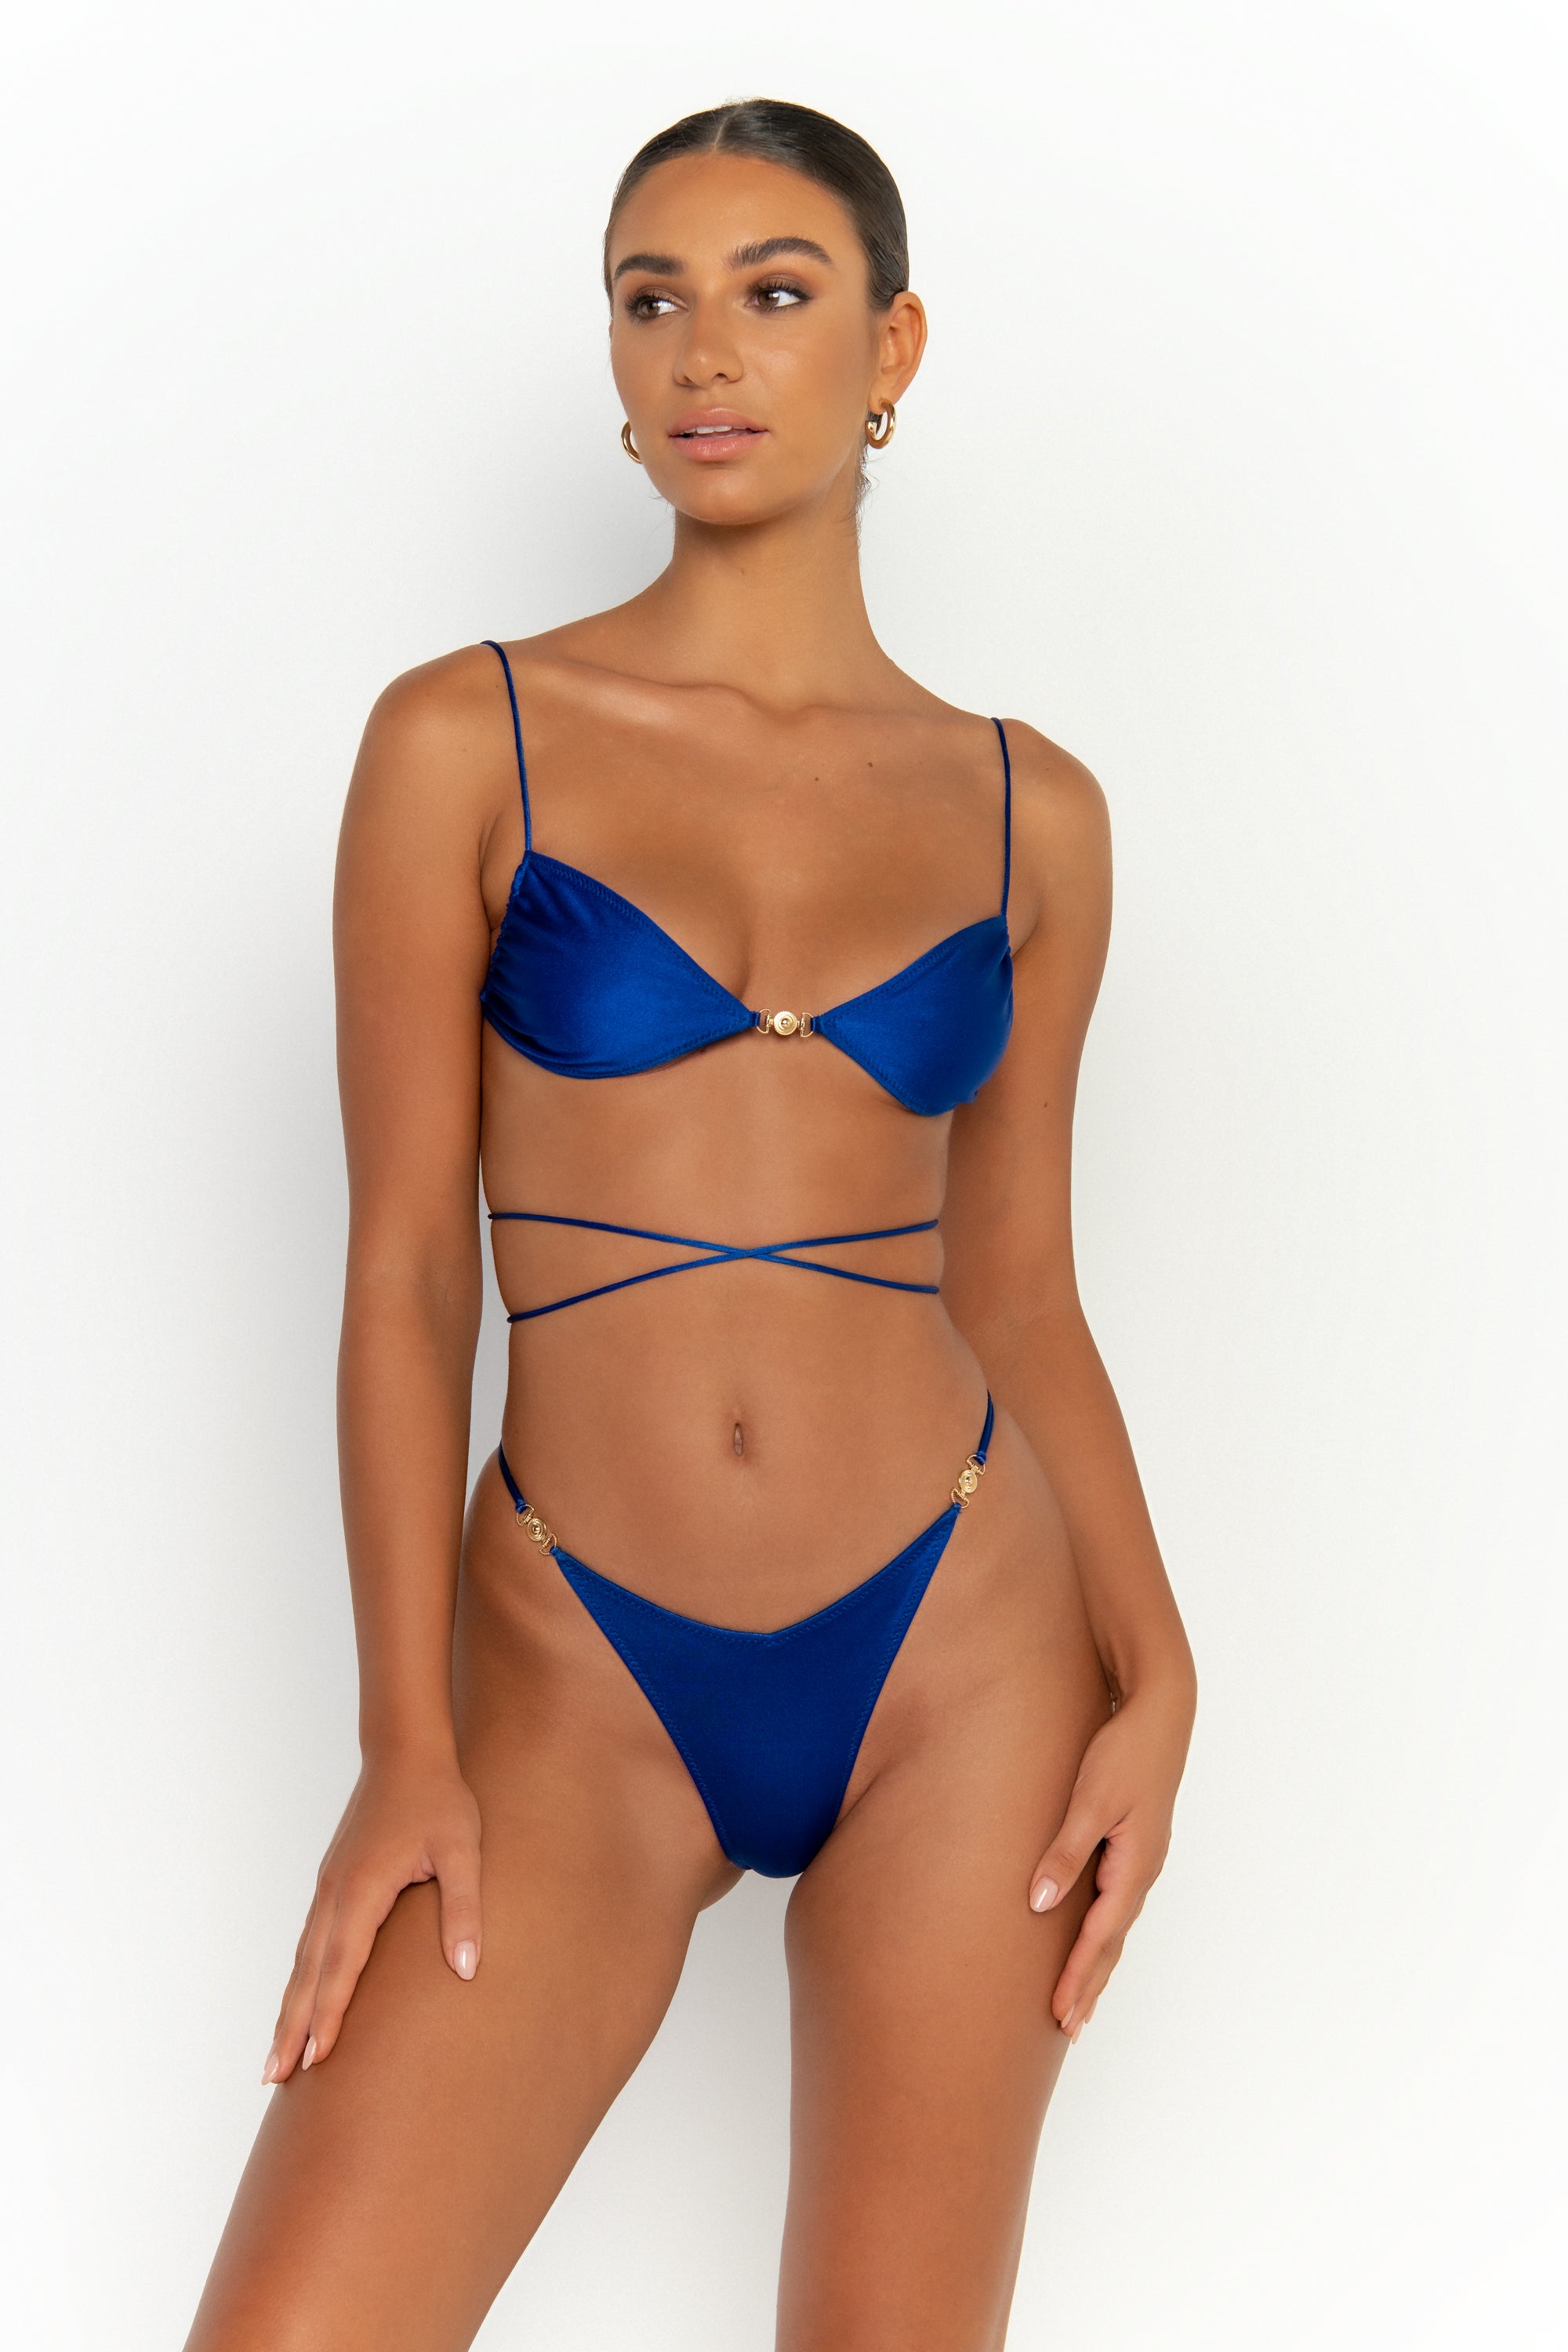 front view elegant woman wearing luxury swimsuit from sommer swim - ella olympus is a royal blue bikini with bralette bikini top